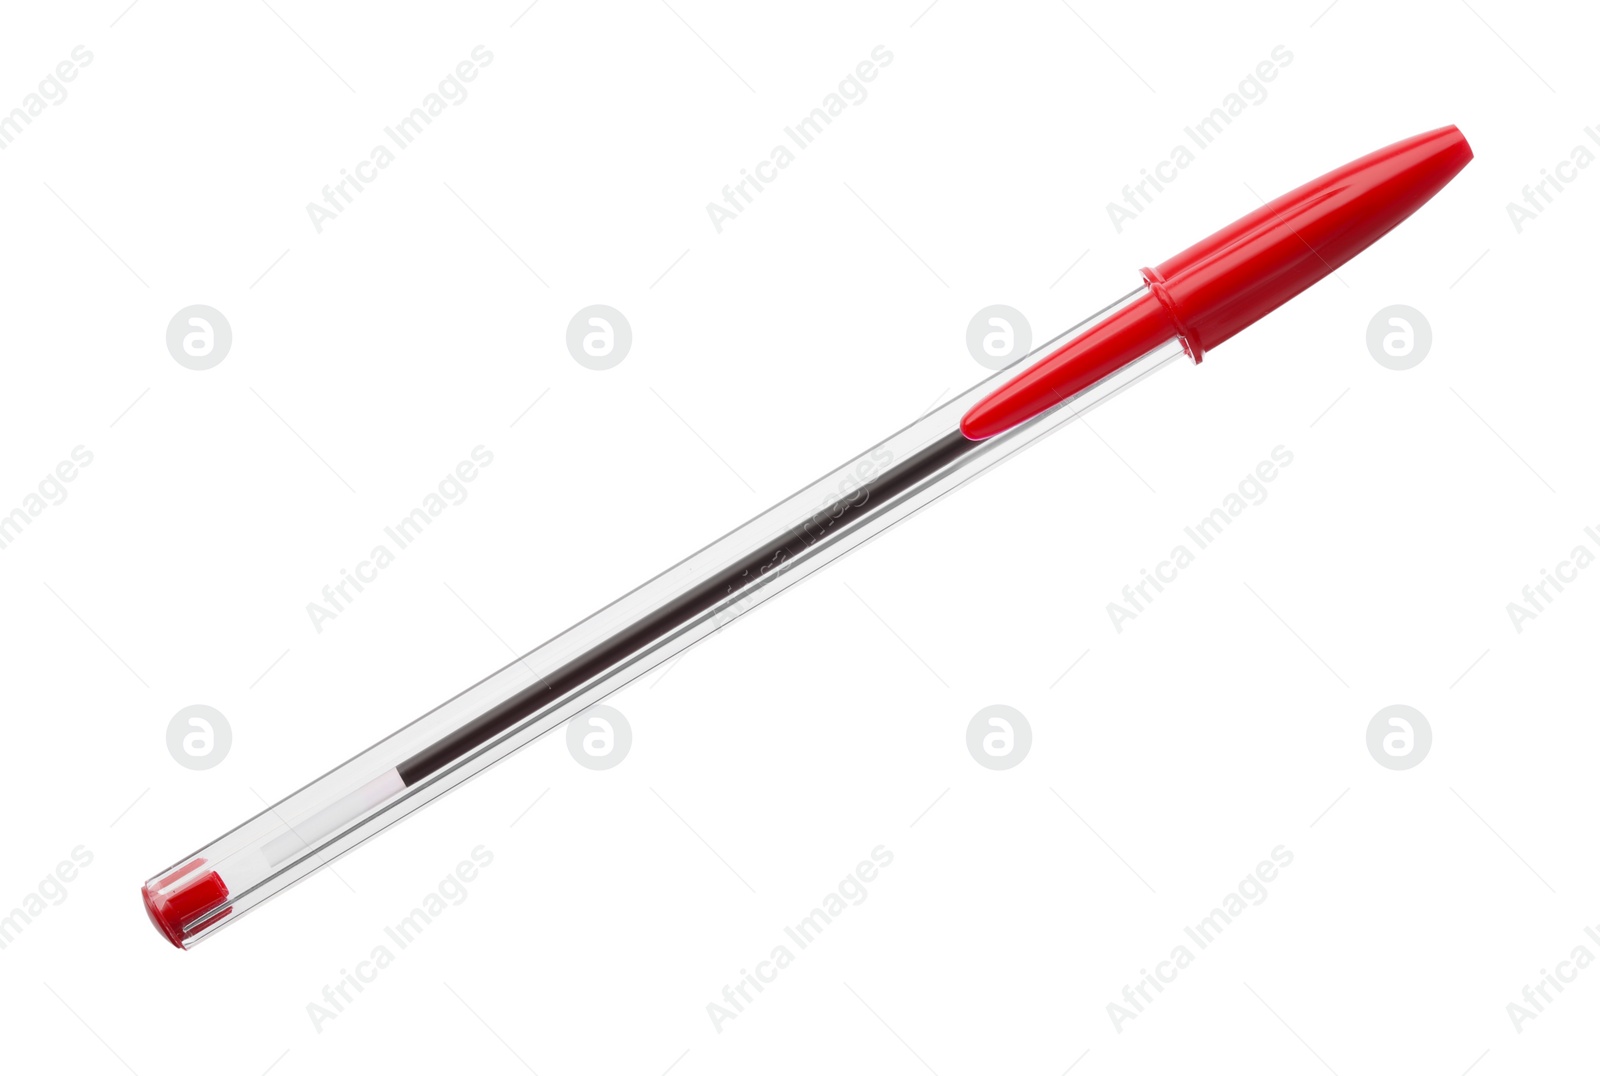 Photo of New stylish red pen isolated on white